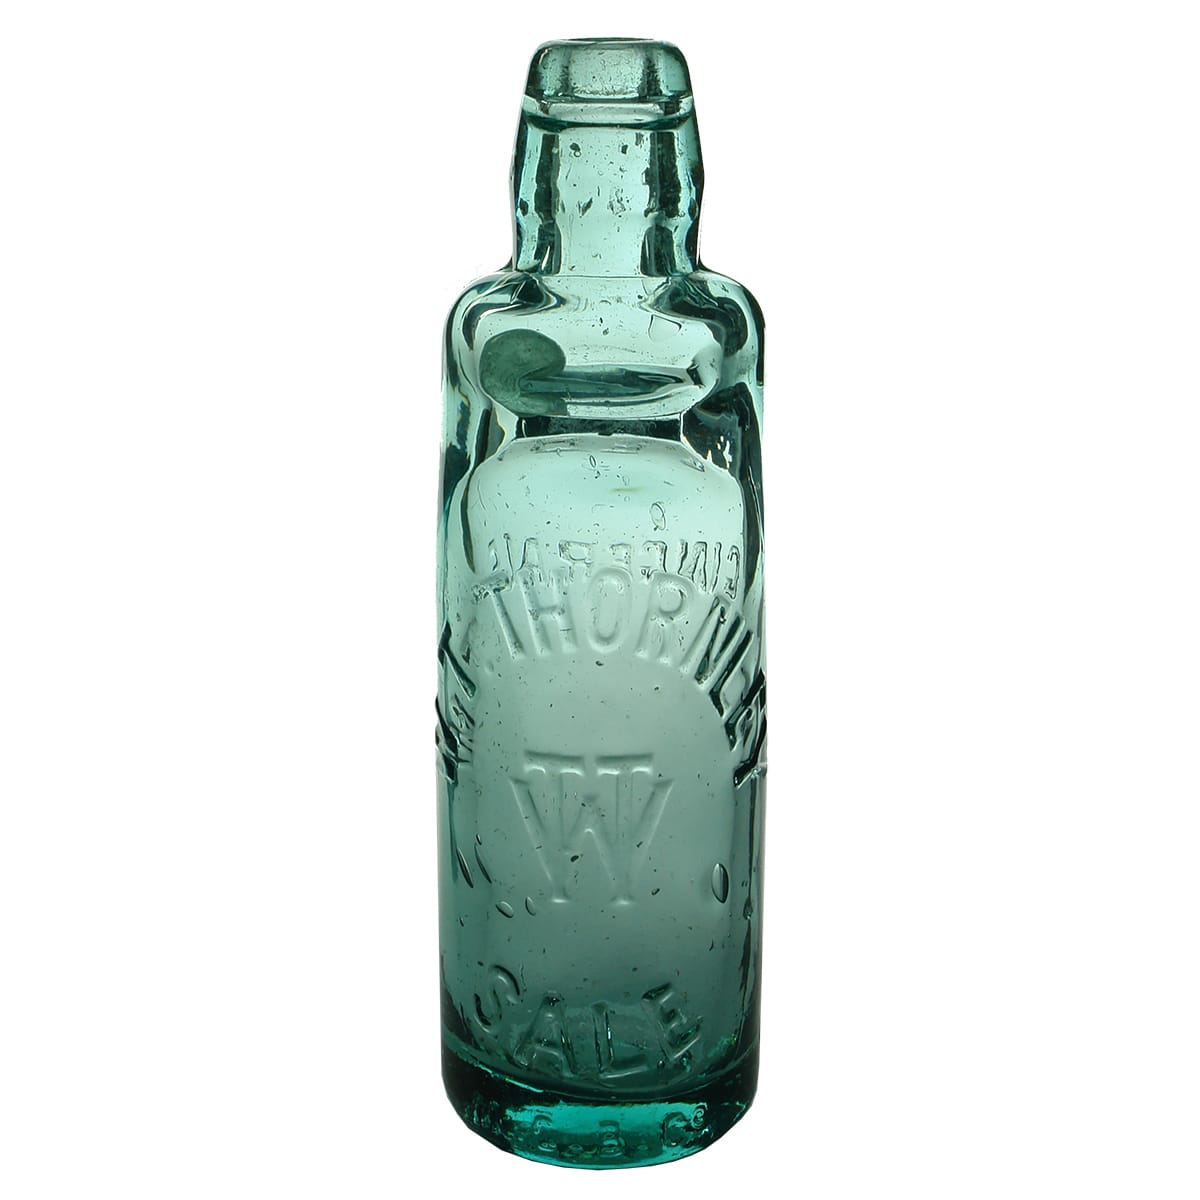 Codd. W. T. Thornley, Sale. Ginger Ale. All Way Pour. Aqua. 10 oz. (Victoria)